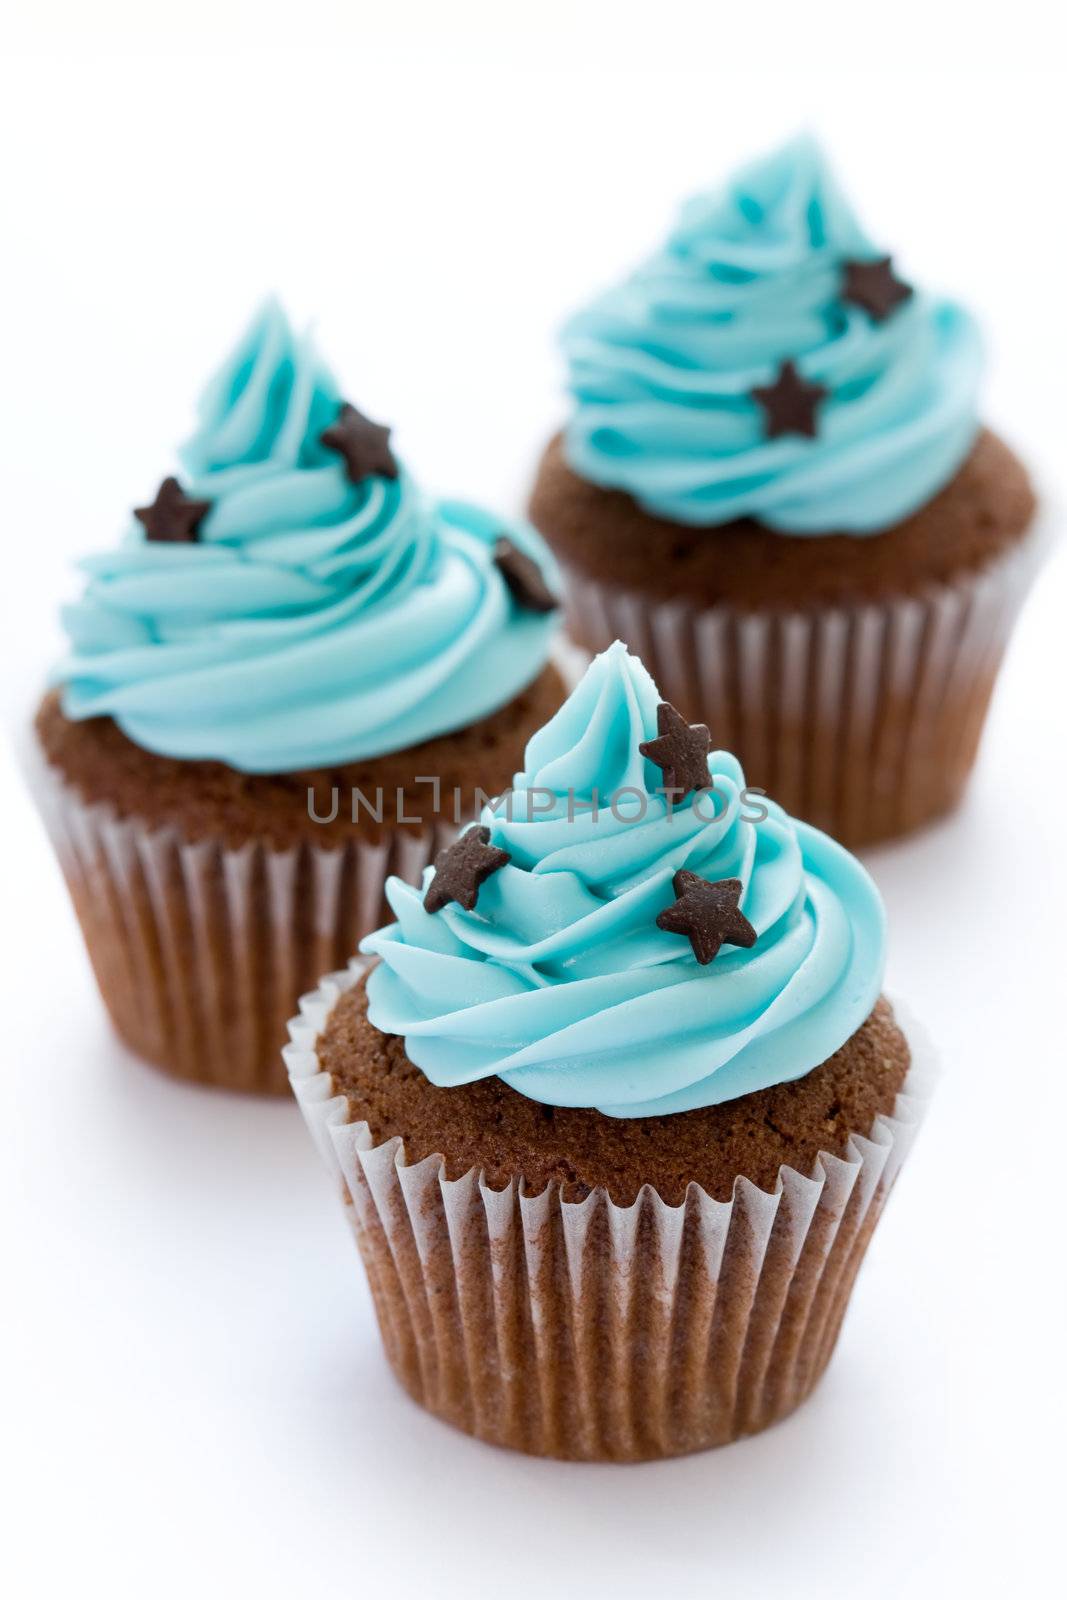 Chocolate cupcakes by RuthBlack